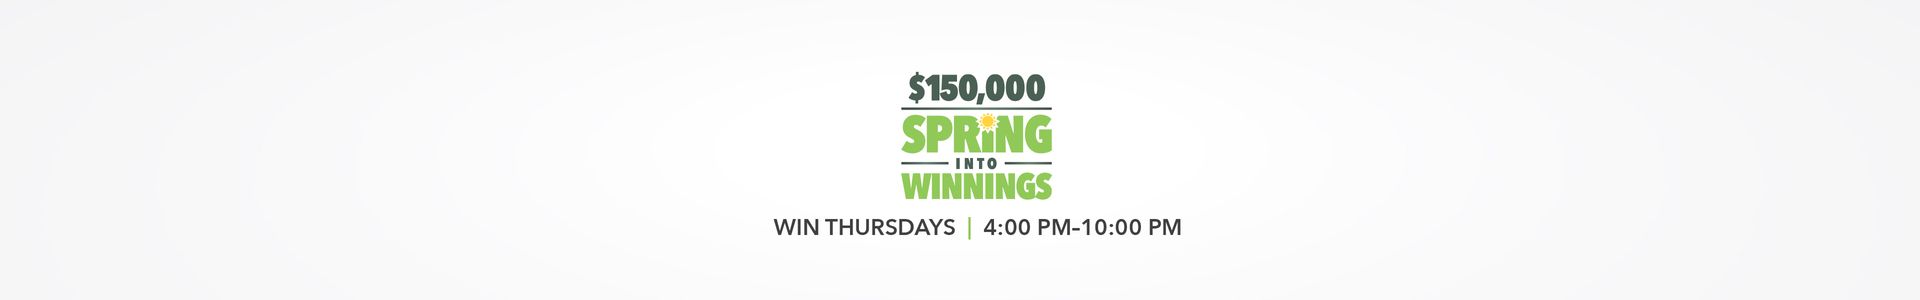 $150,000 Spring Into Winnings